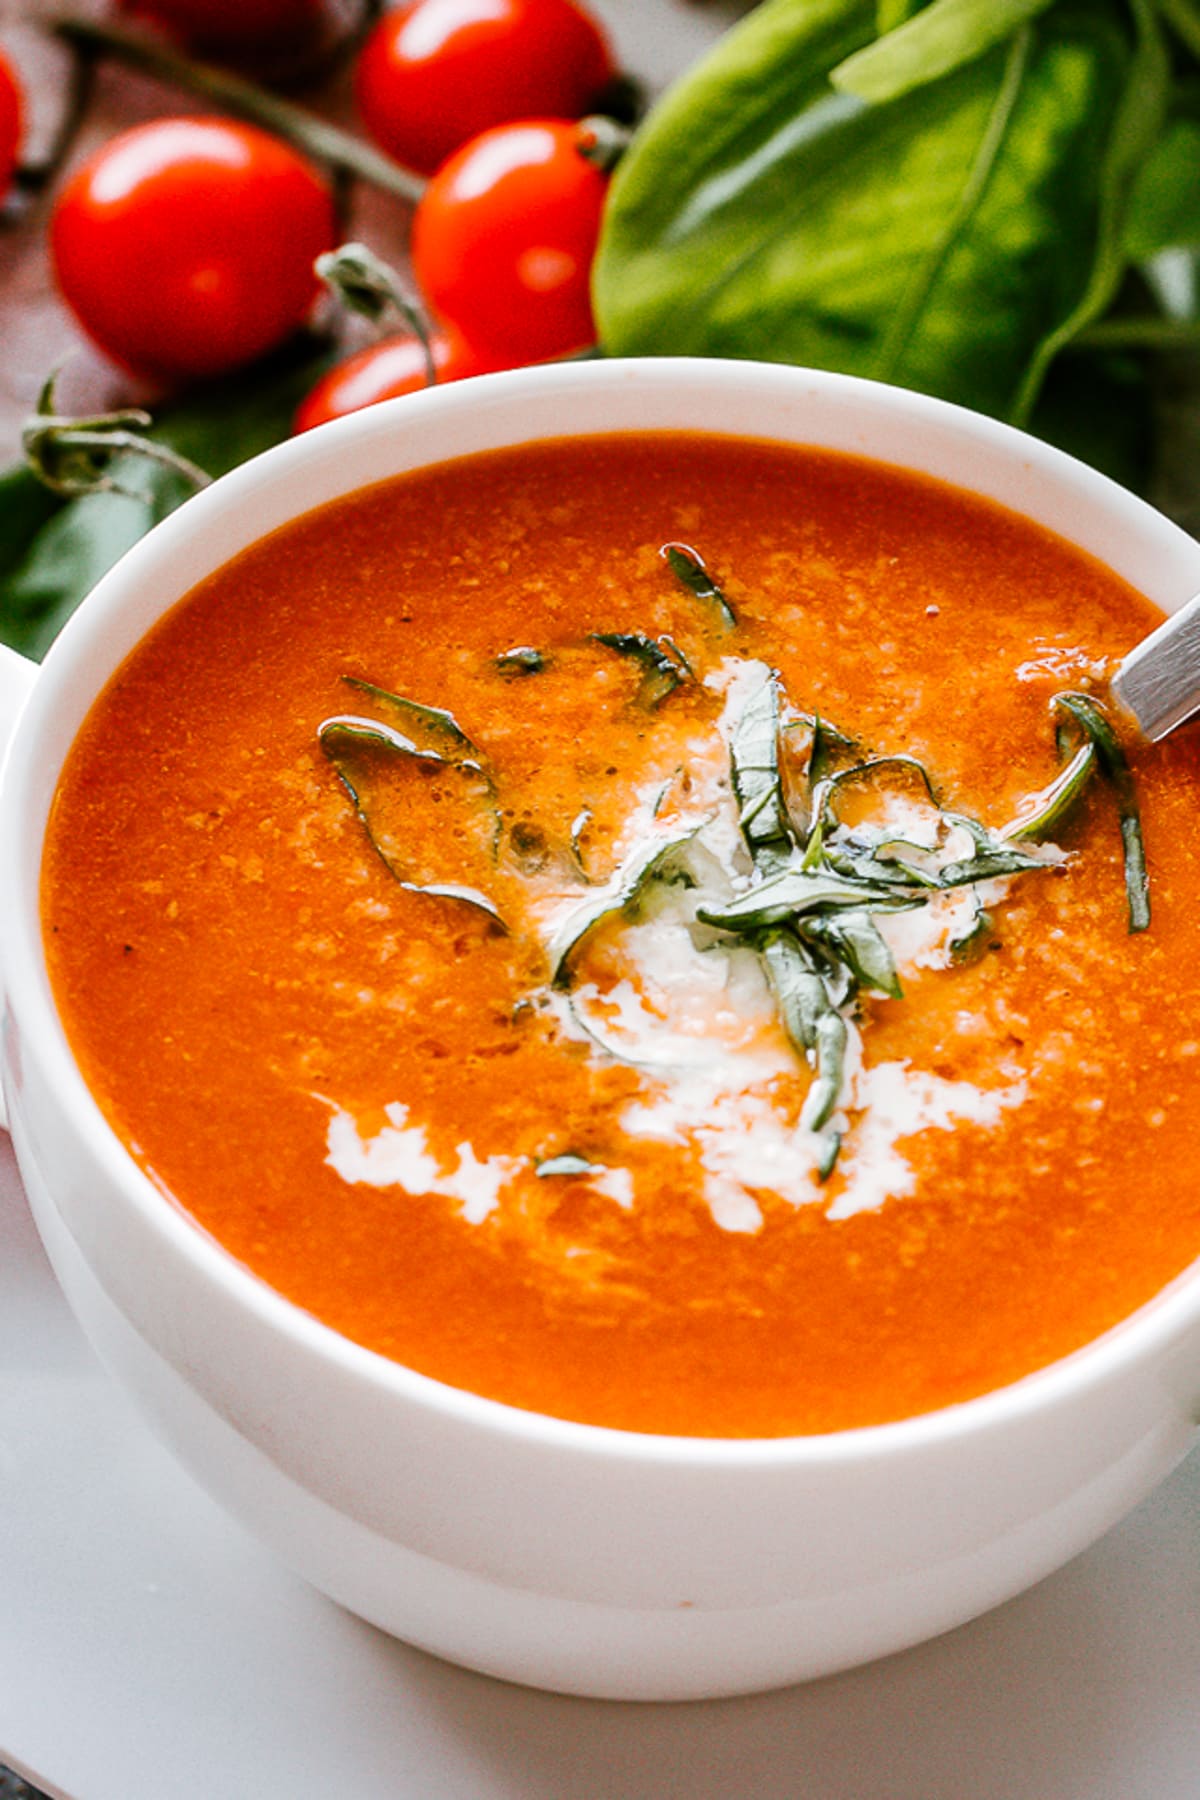 Tomato soup in a white bowl.